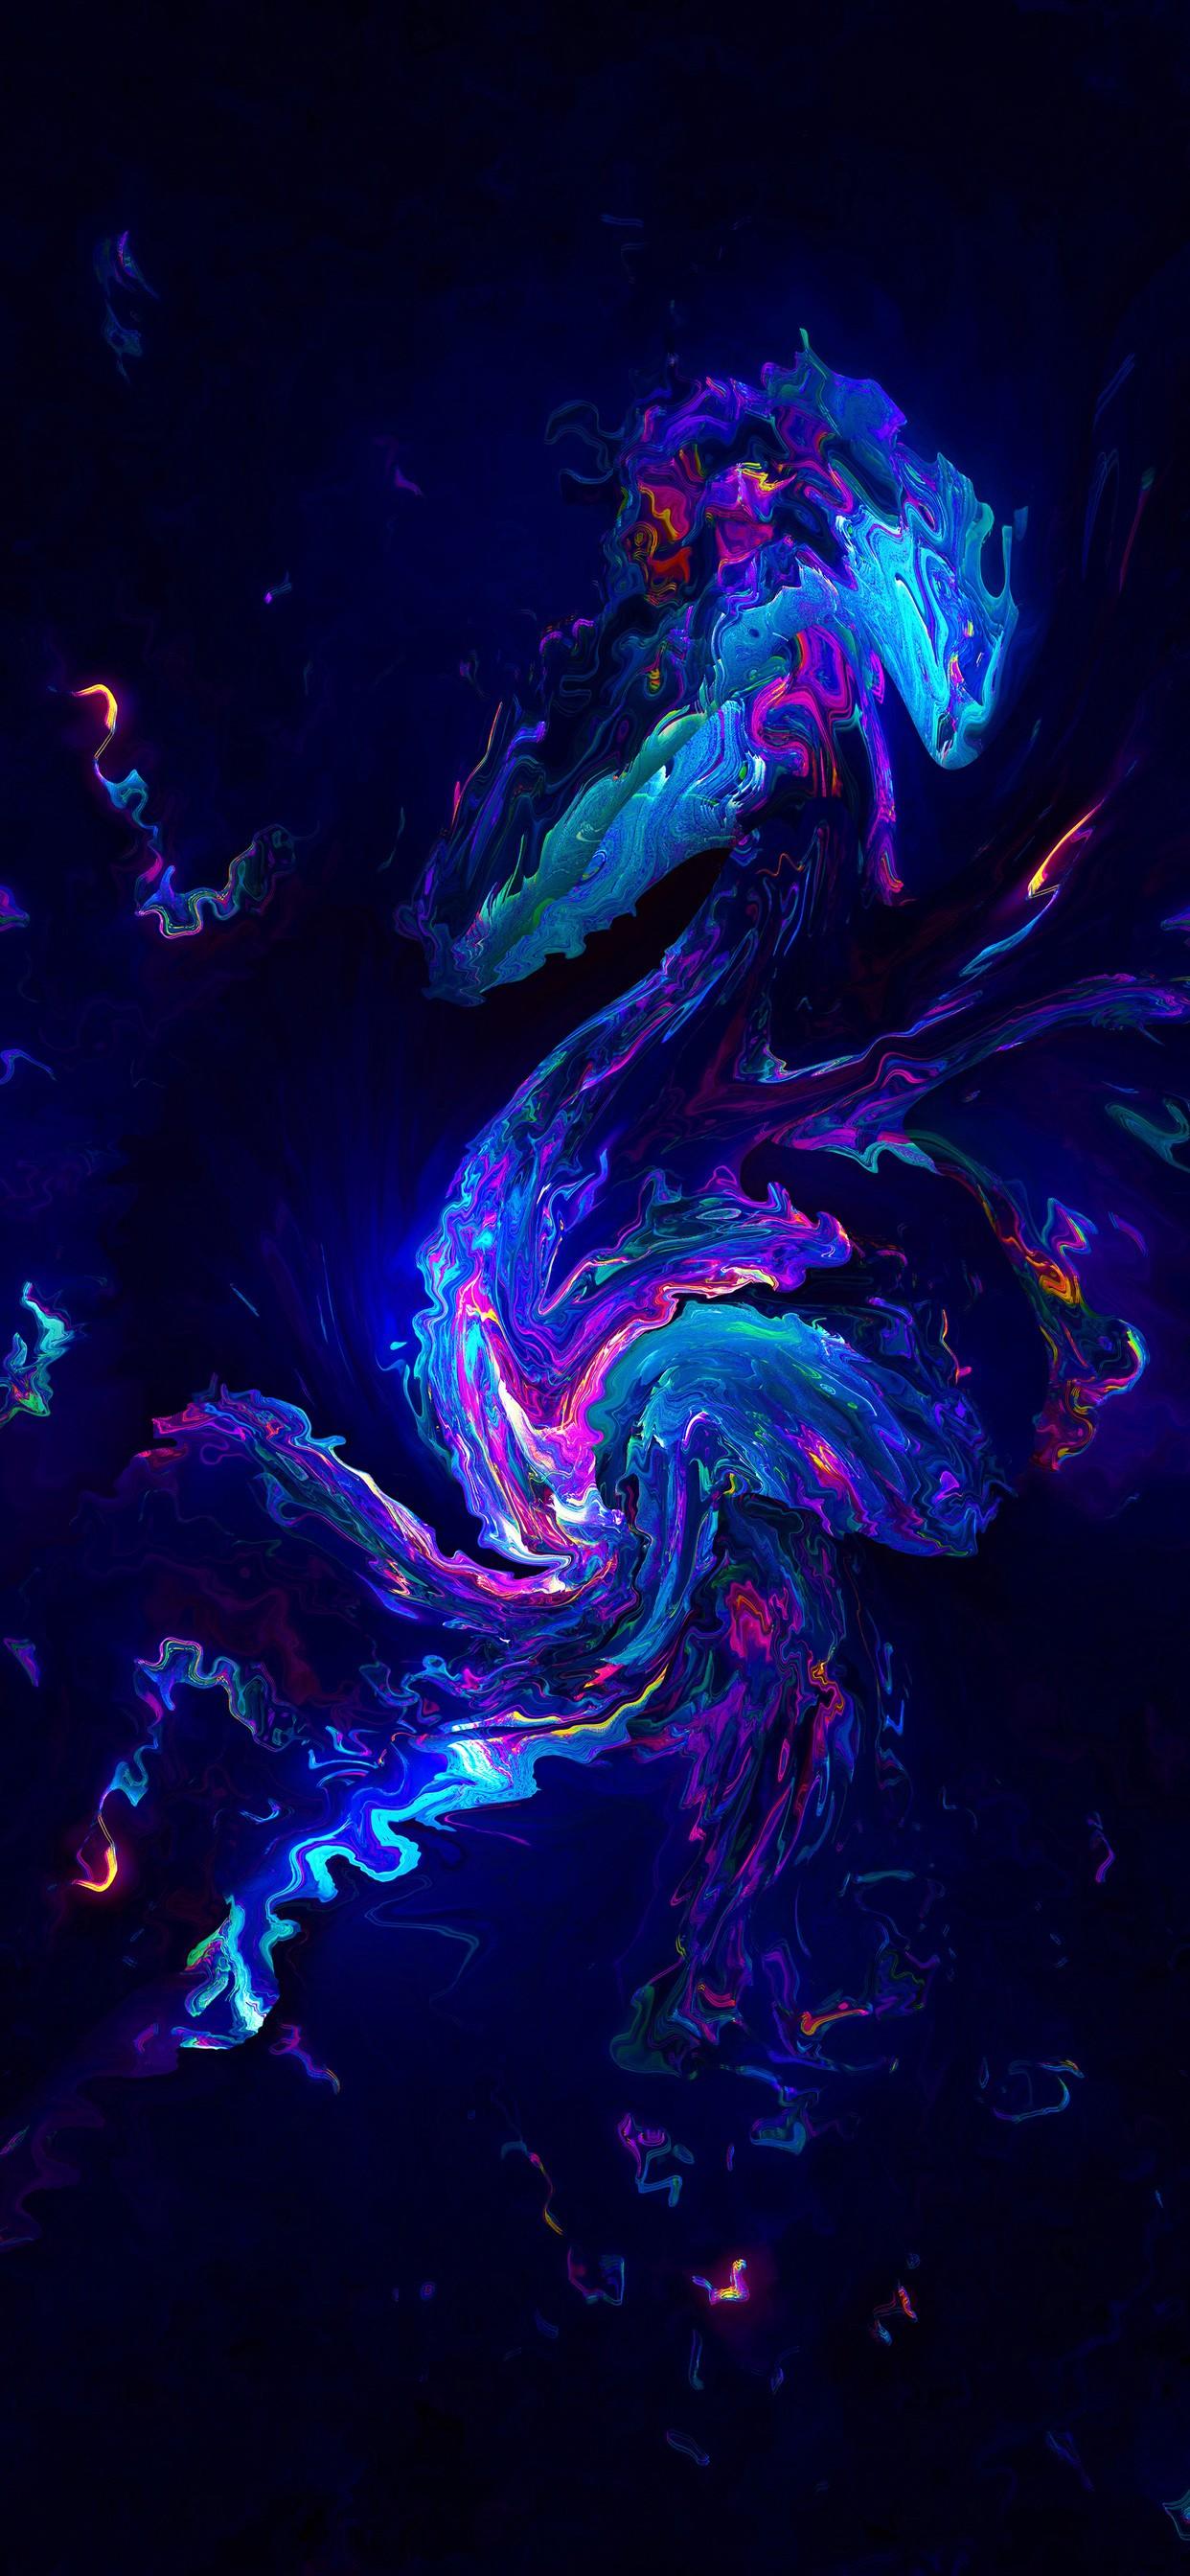 iPhone Wallpaper. Water, Blue, Purple, Light, Violet, Electric blue